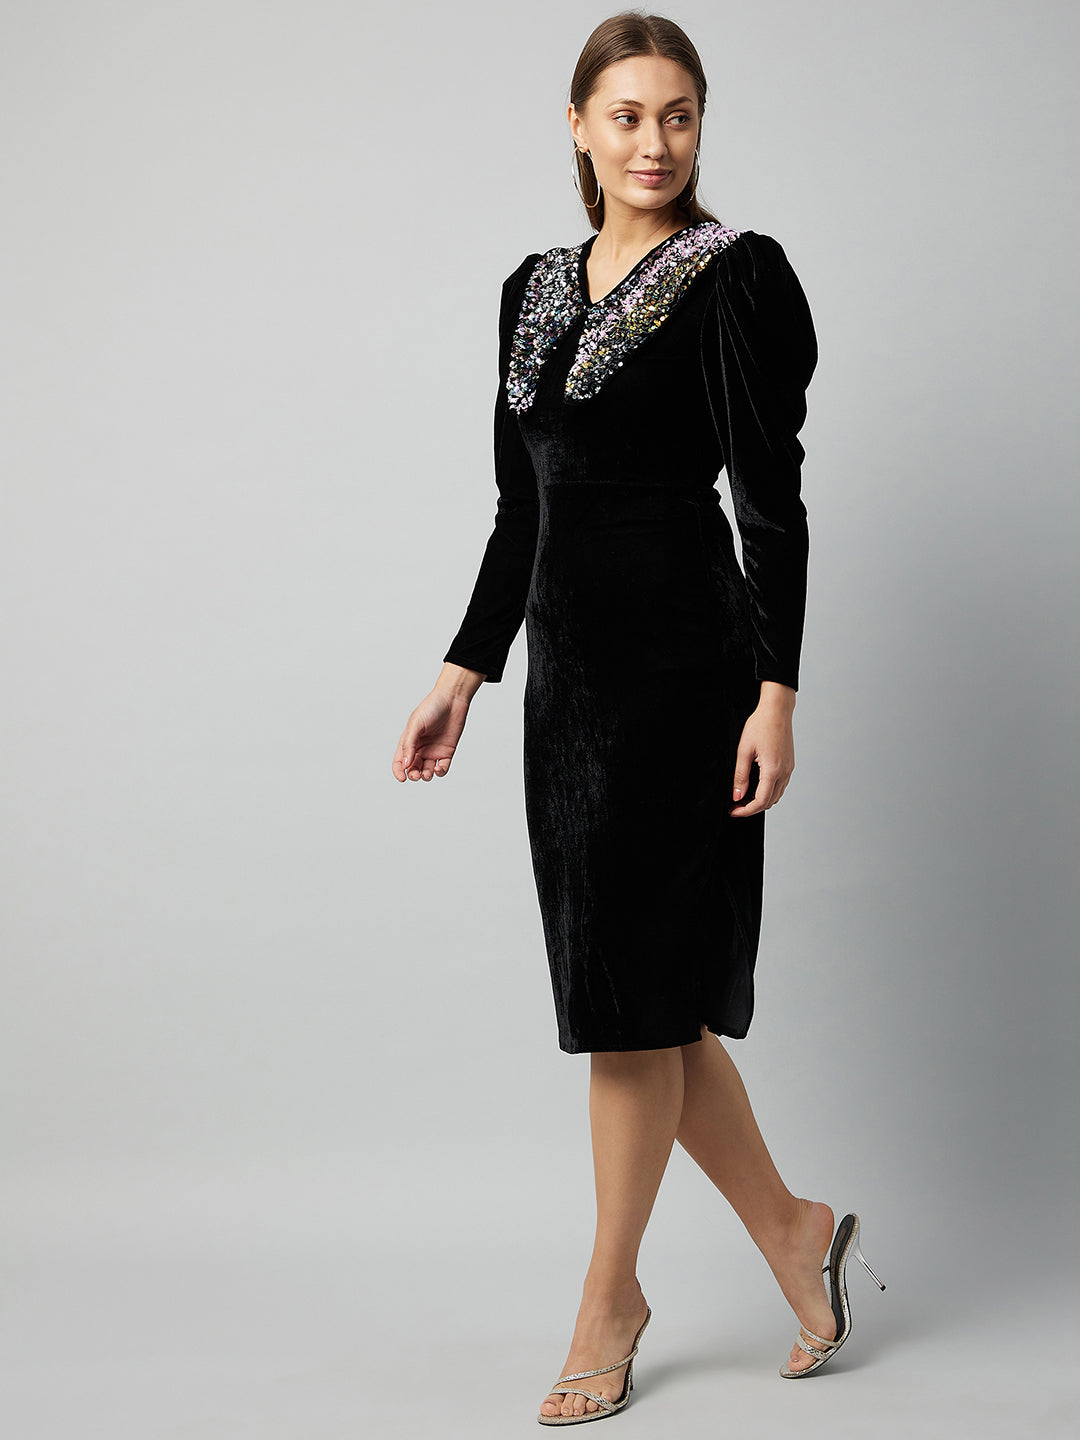 Athena Black Velvet Sheath Dress – Athena Lifestyle